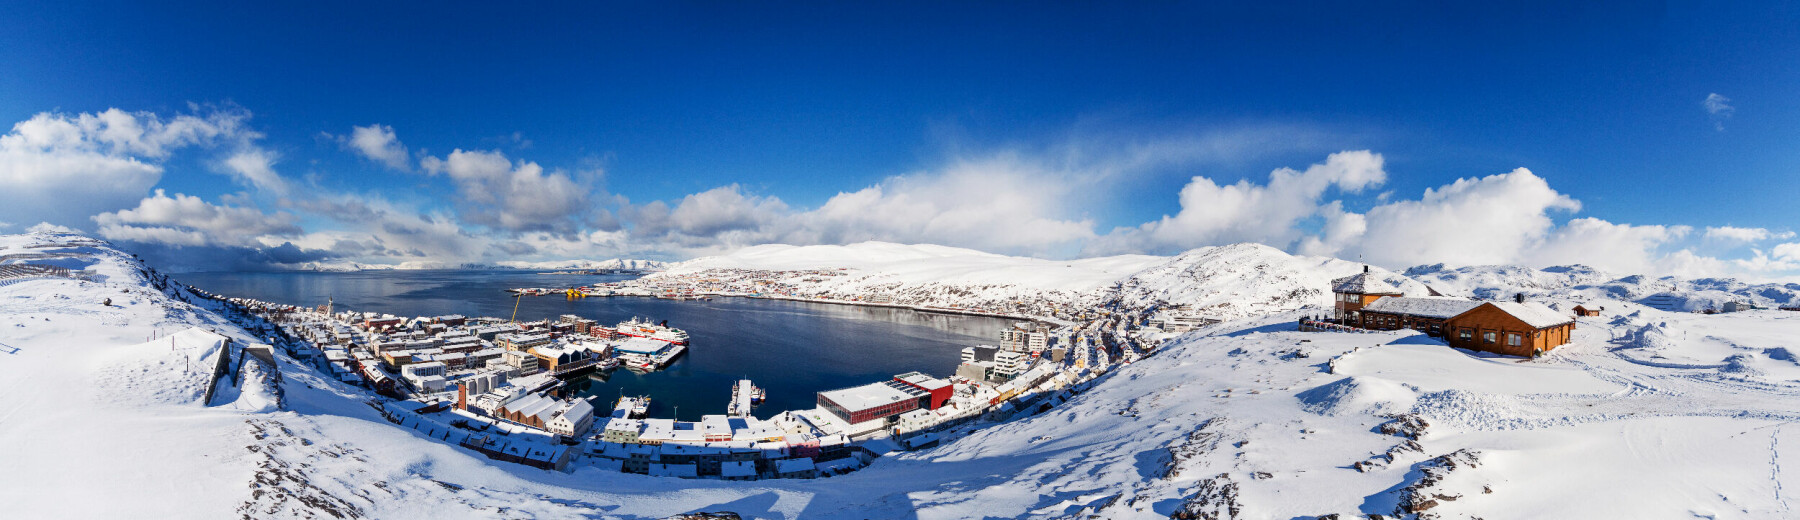 Hammerfest i vinterdrakt!